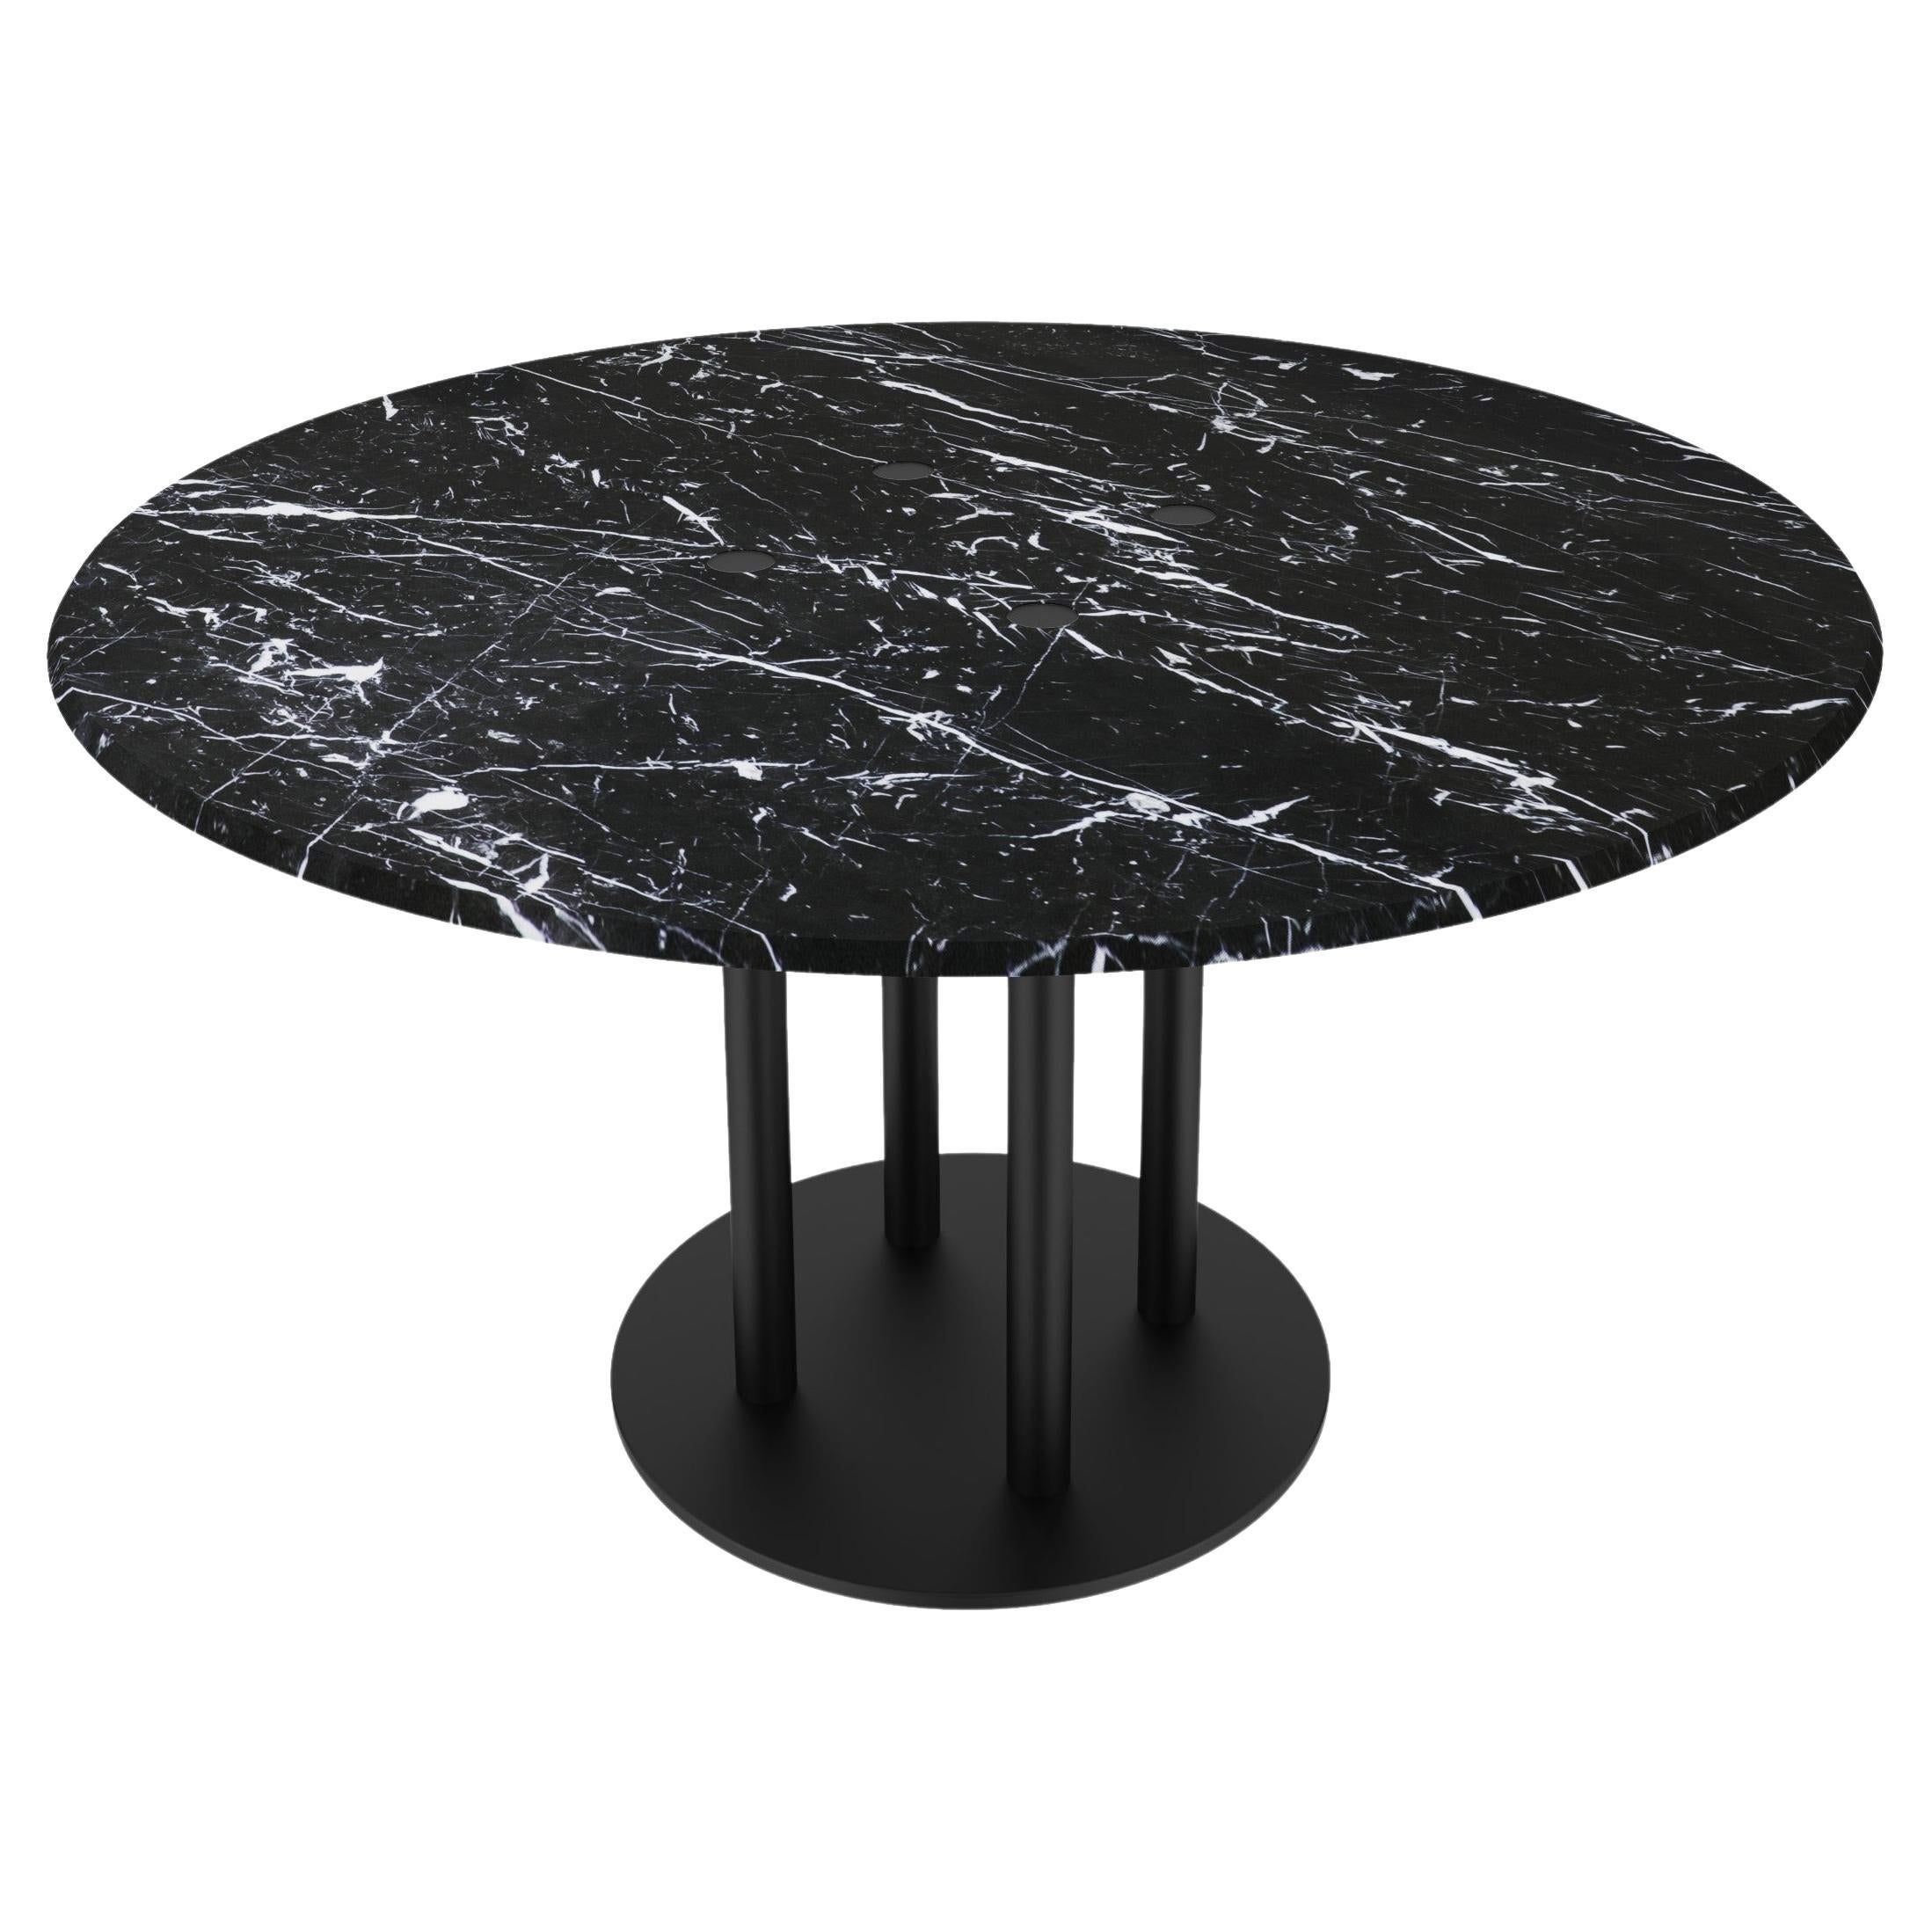  NORDST Lot Dining Table, Italian Black Marble, Danish Modern Design, New